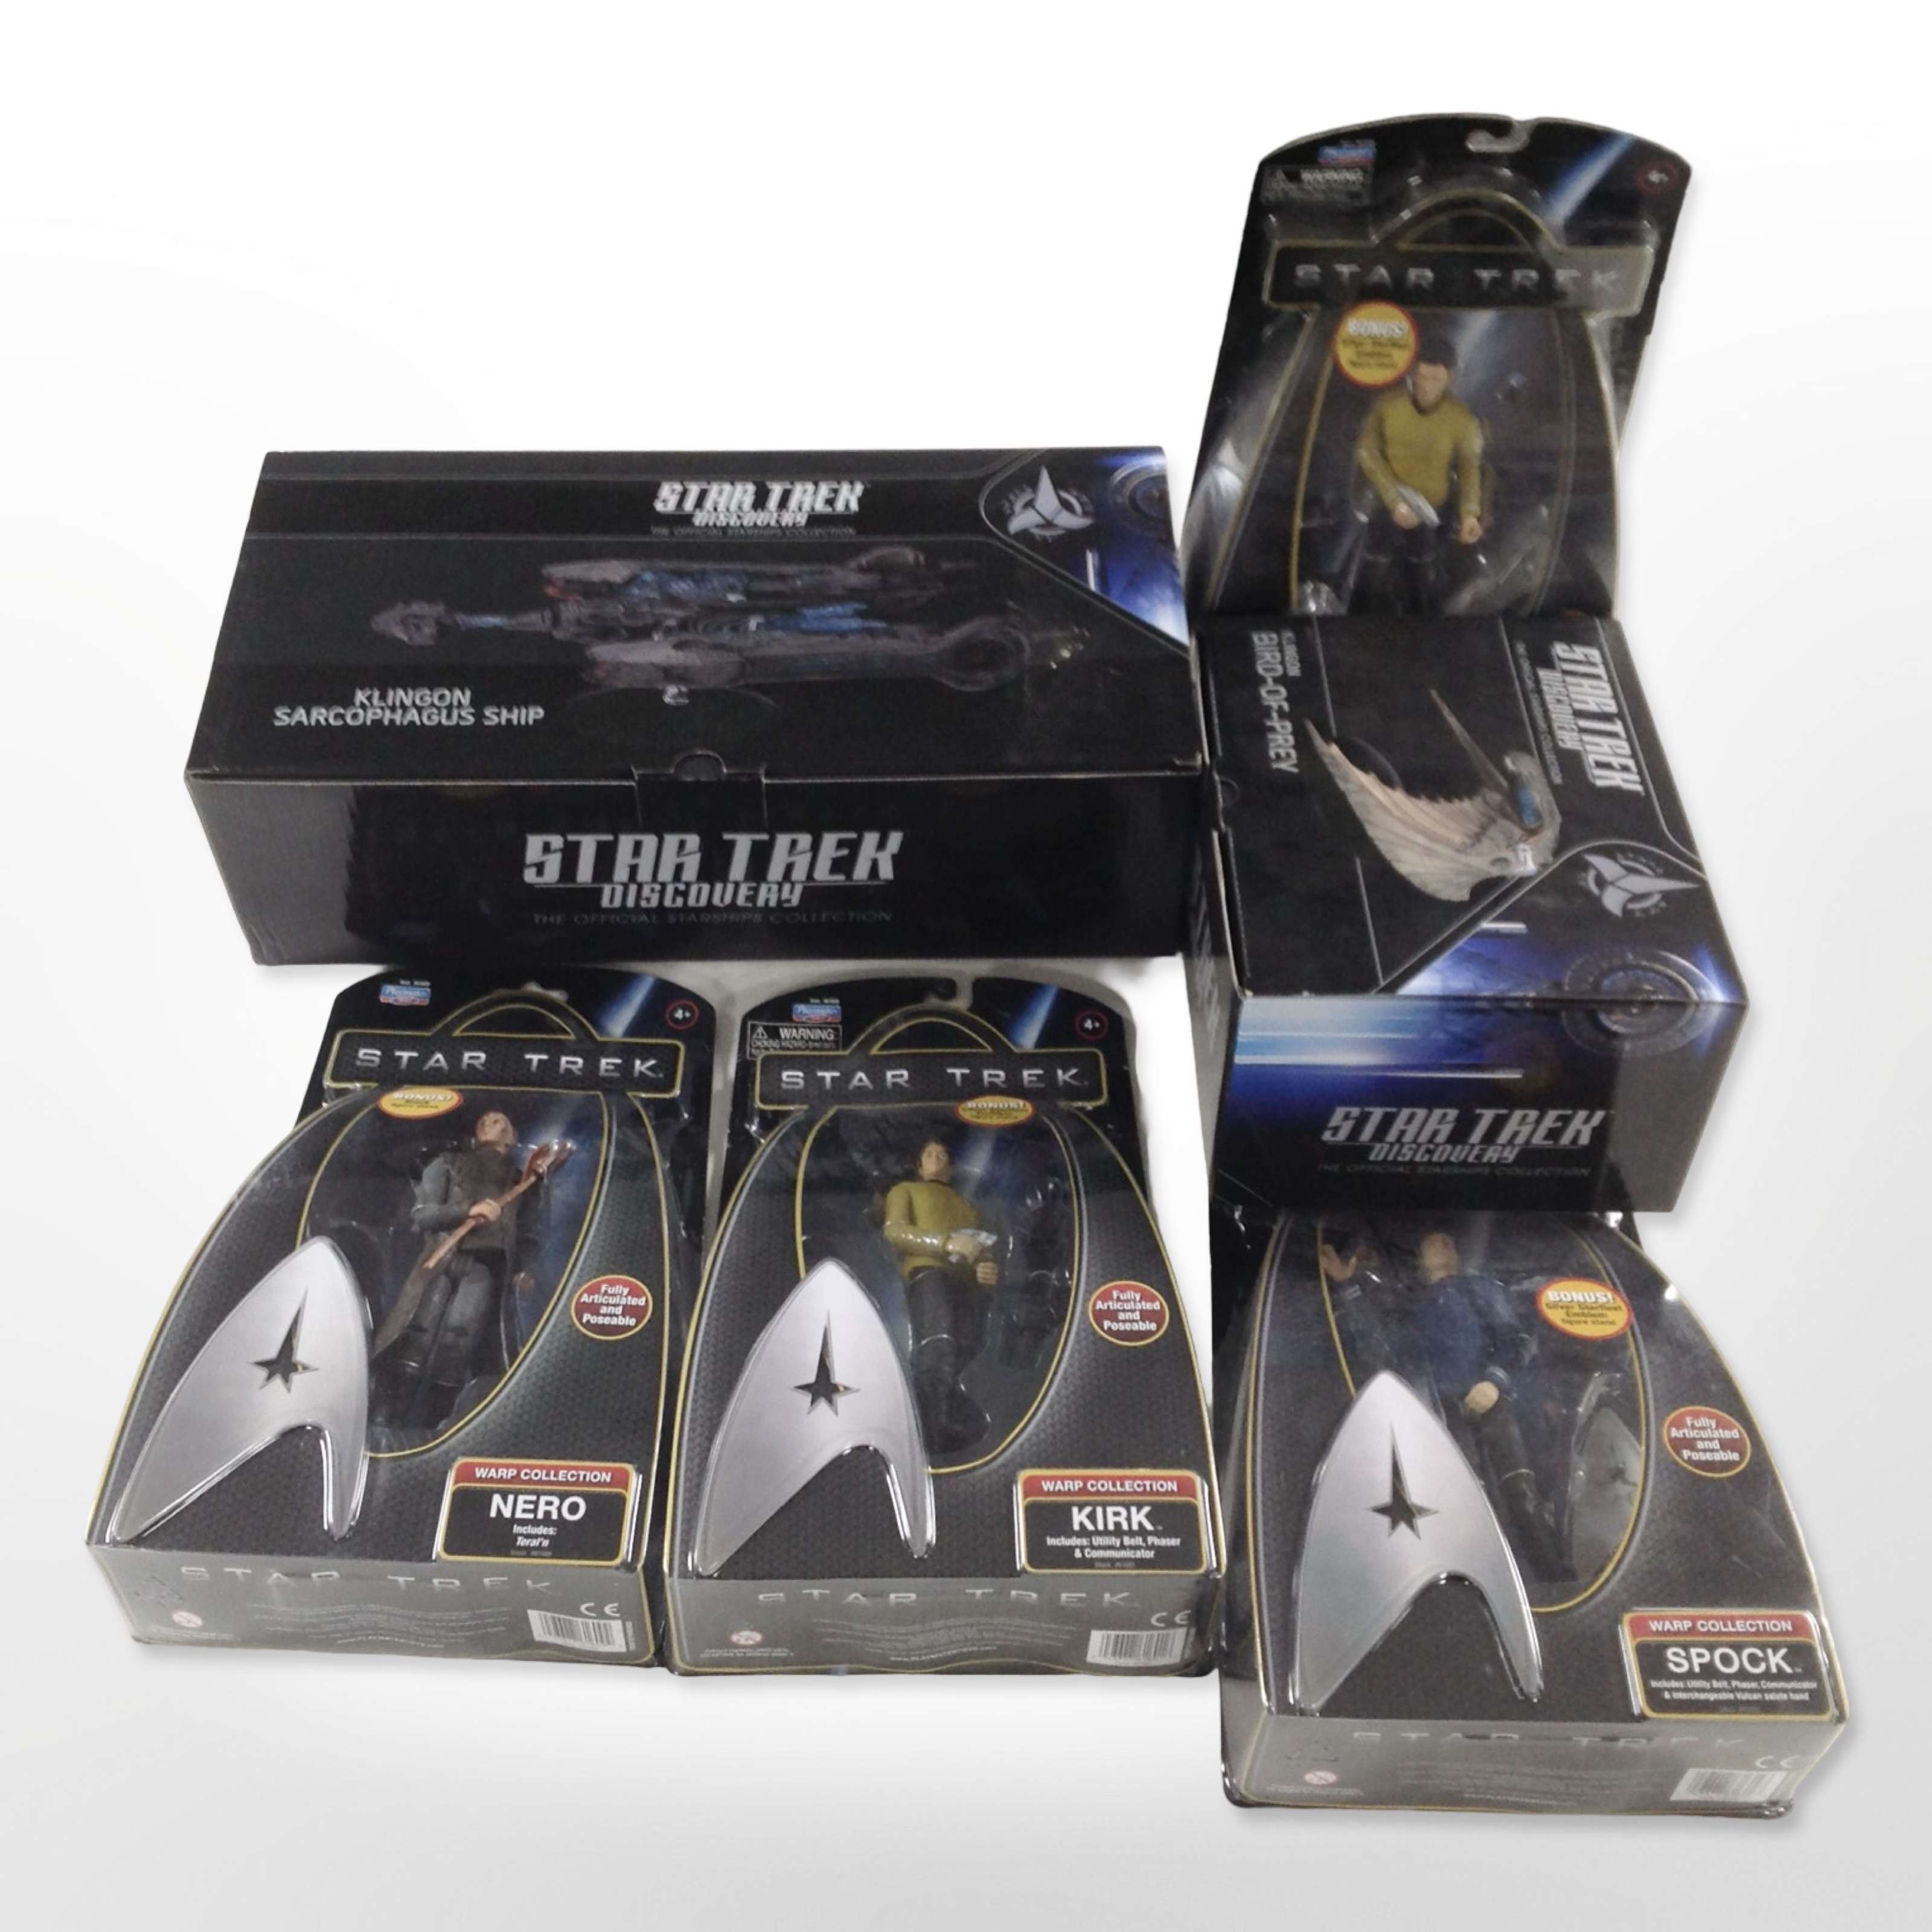 Four Playmates Toys Star Trek figurines,